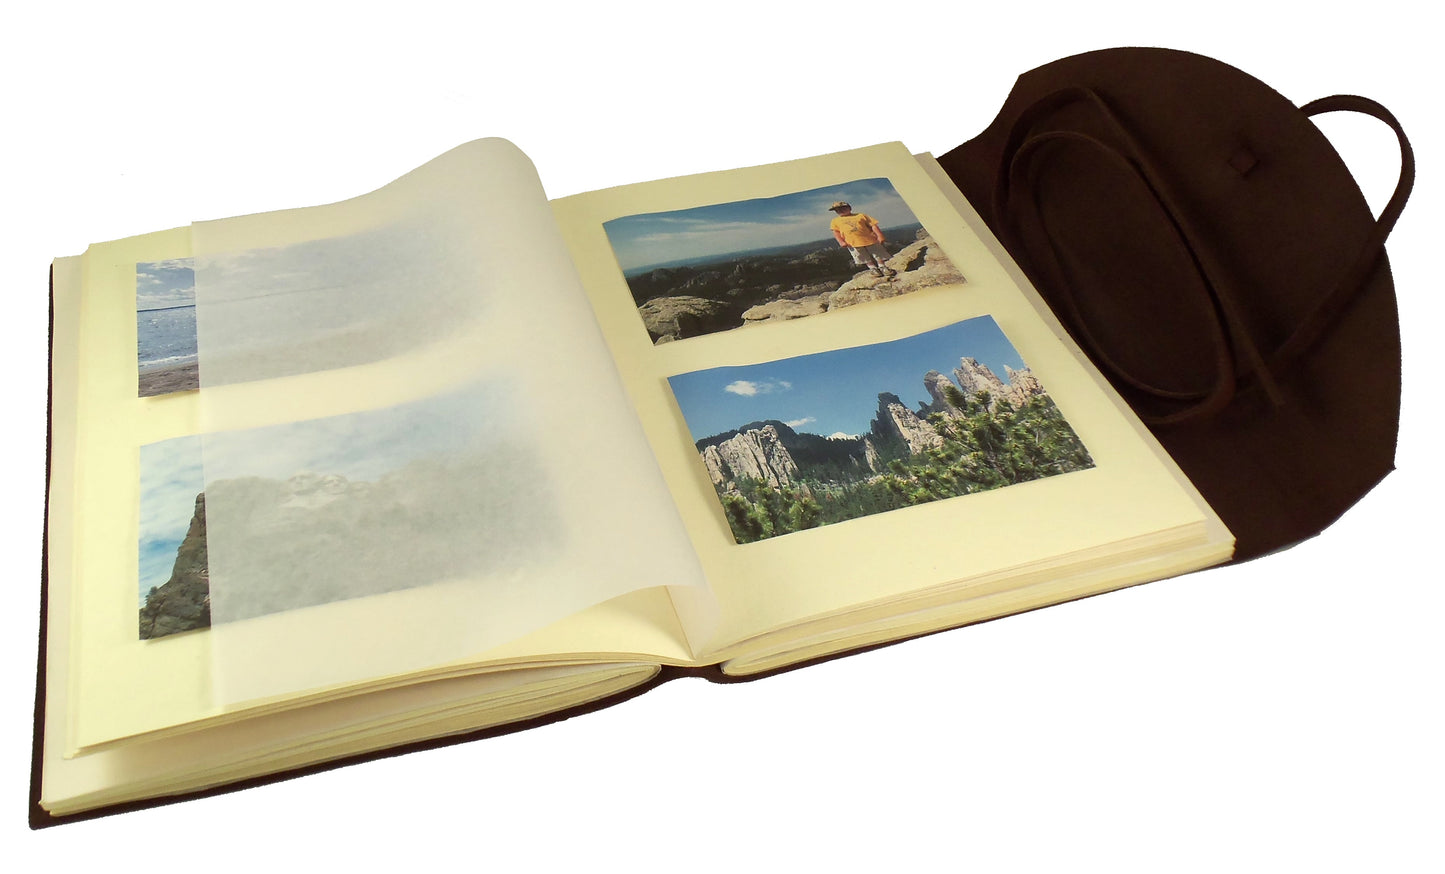 Large Genuine Leather Legacy Photo Album with Gift Box - 9x12" - Rustic Ridge Leather